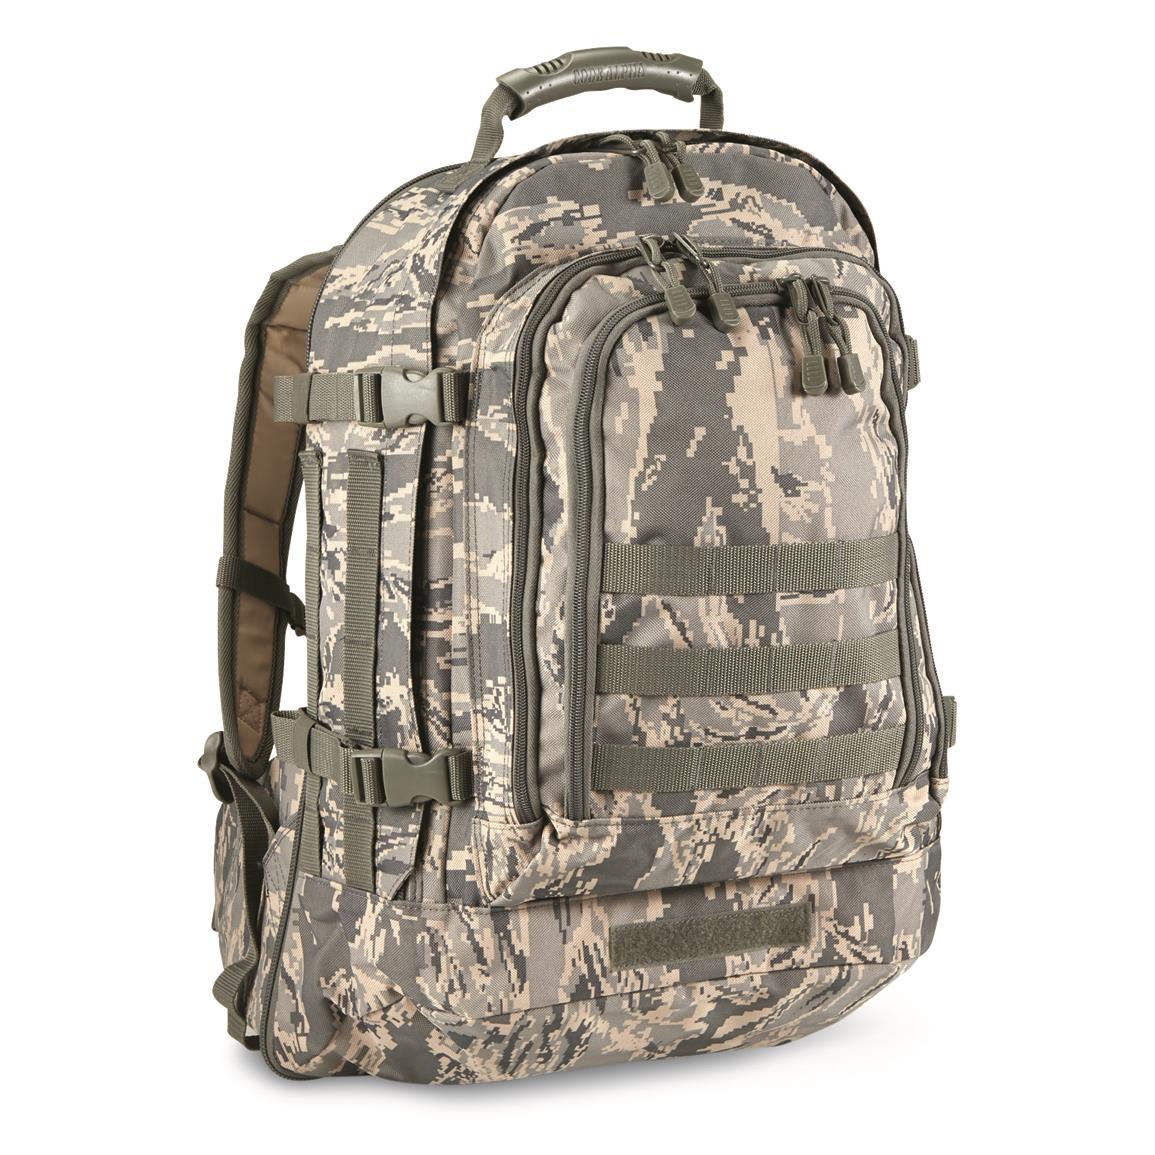 U.S. Military Surplus 3 Day Stretch Backpack, New, ABU Camo